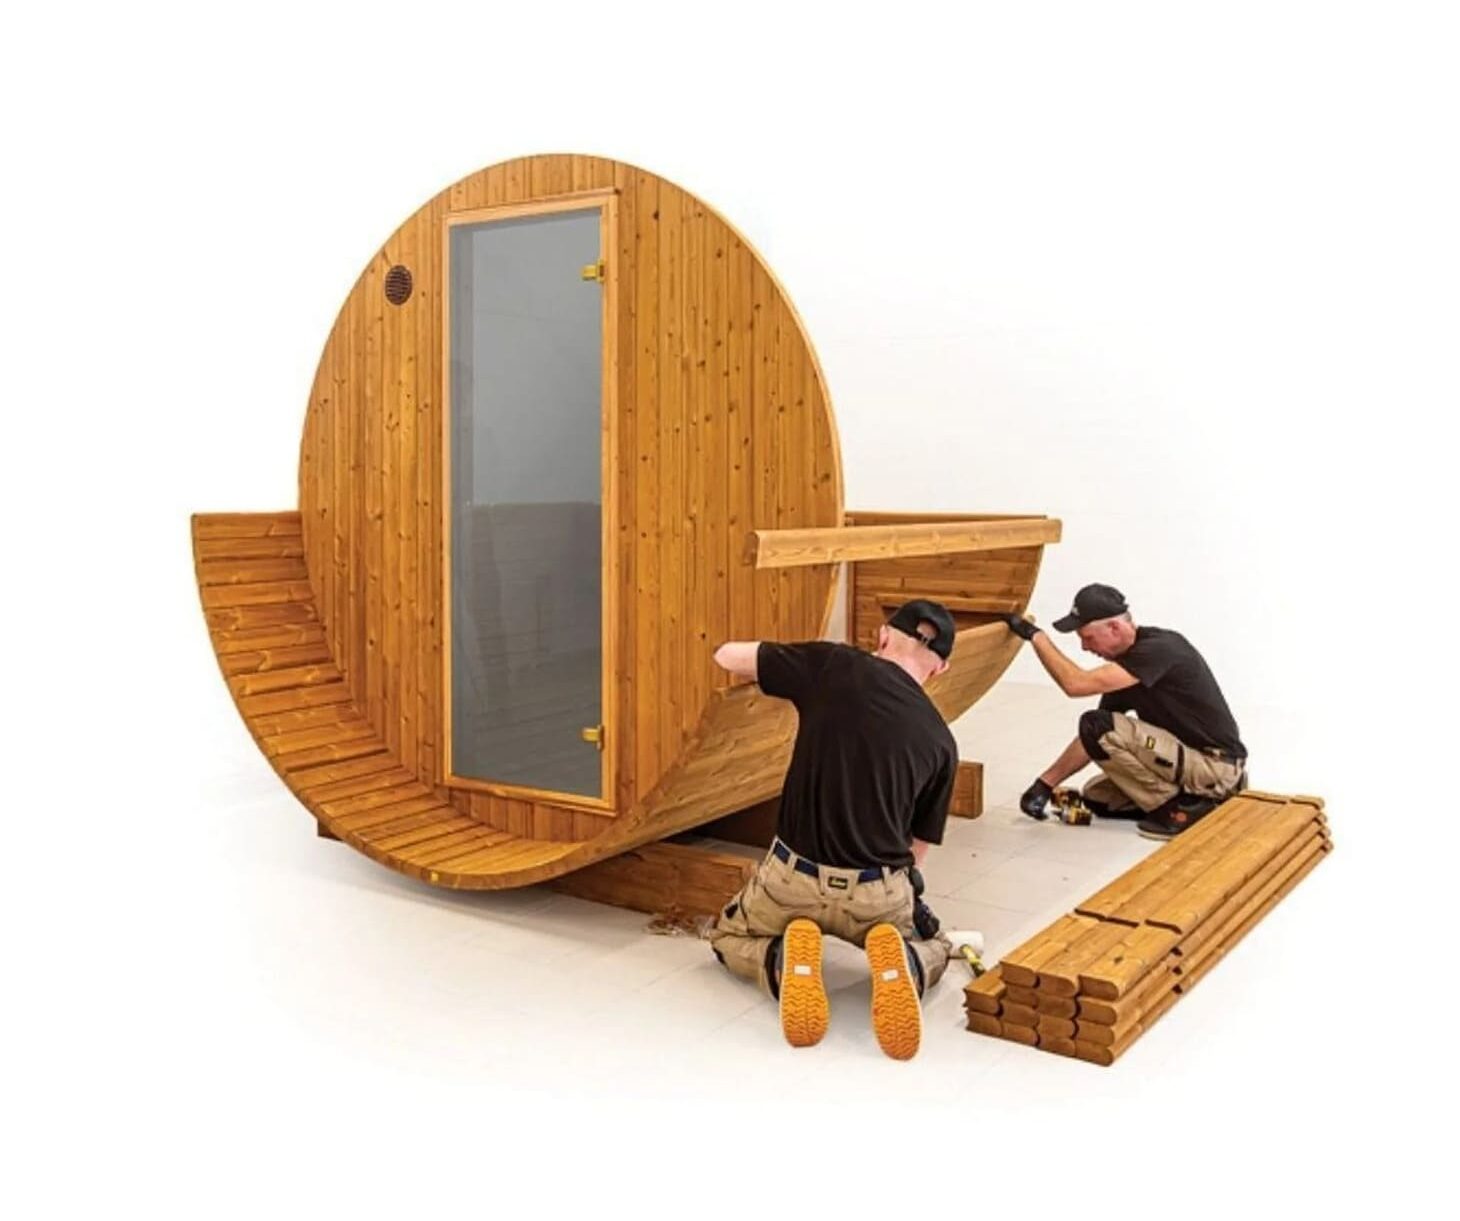 Outdoor Sauna Installation Guide